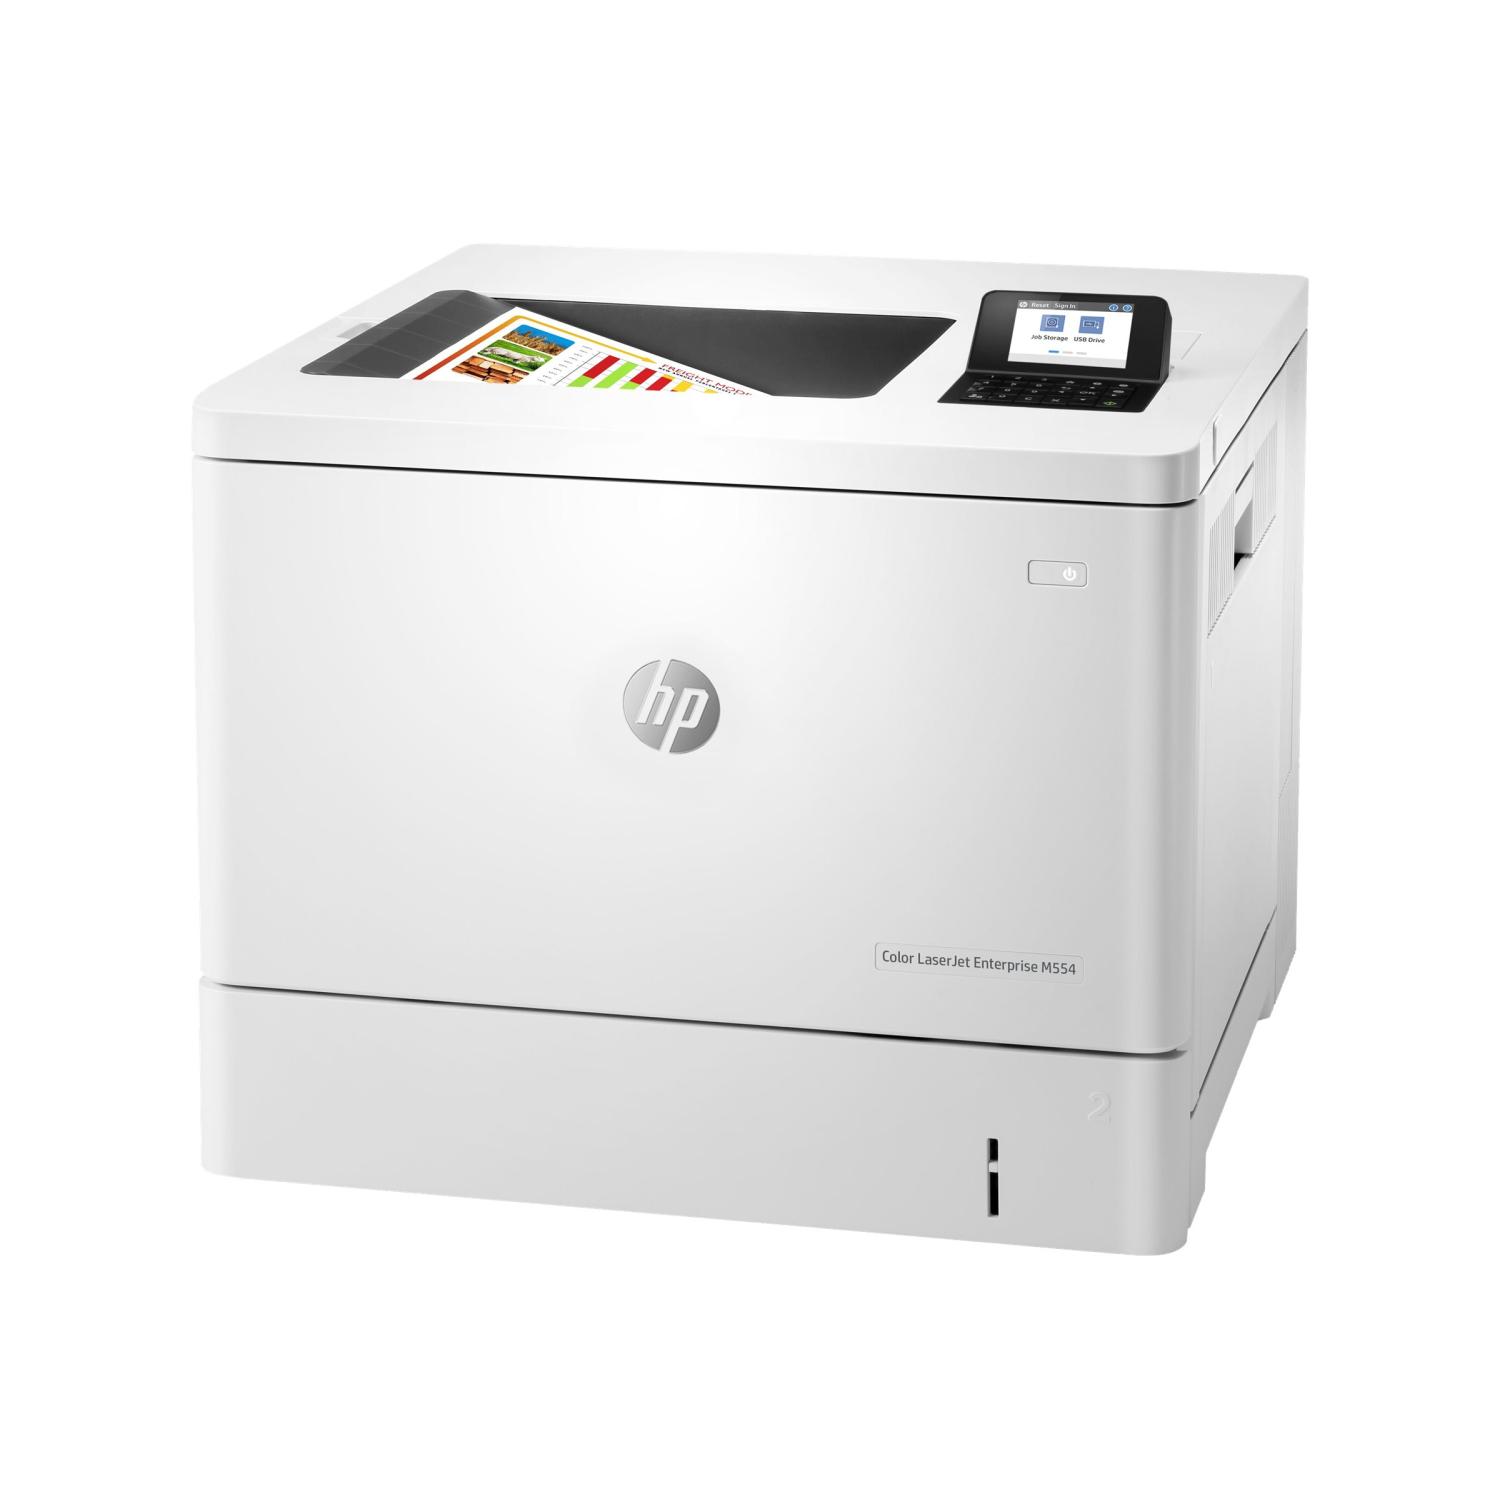 Color LaserJet Enterprise M555 Printer series